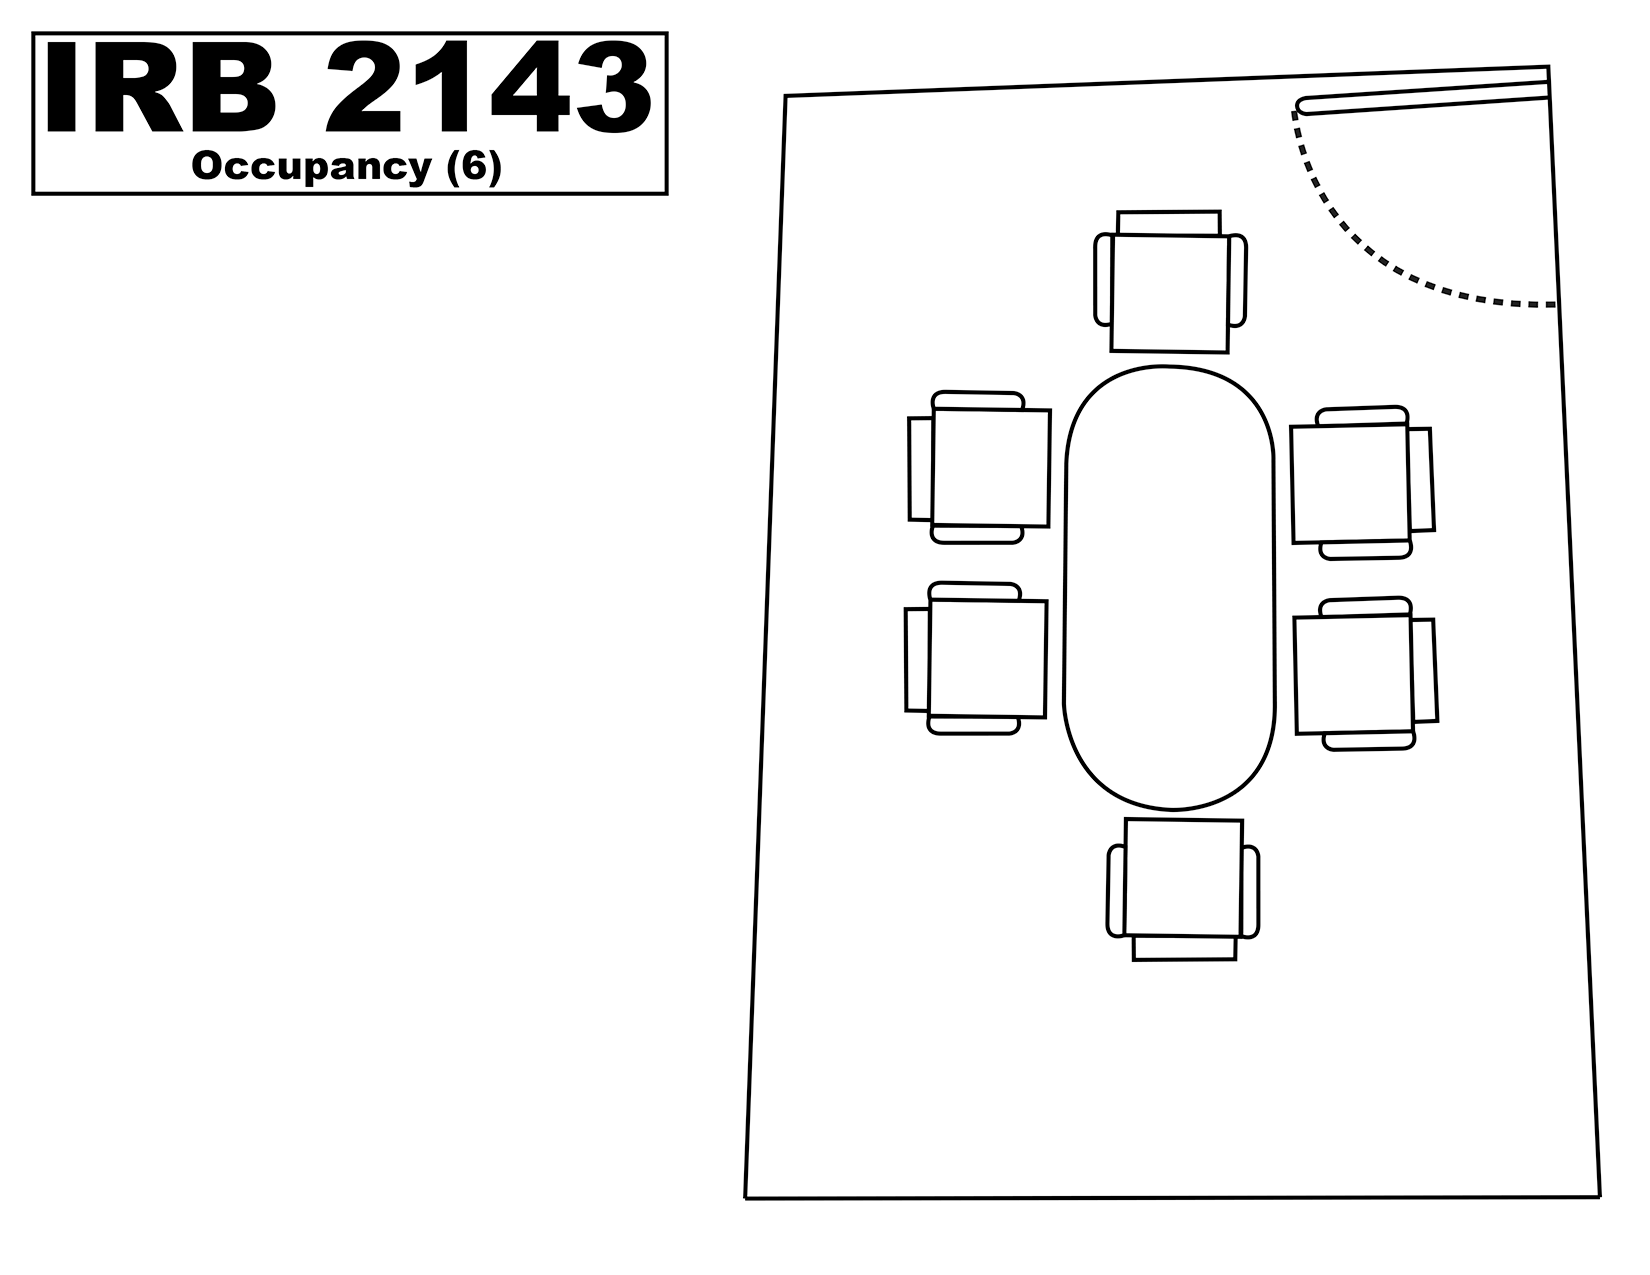 IRB2143 floorplan